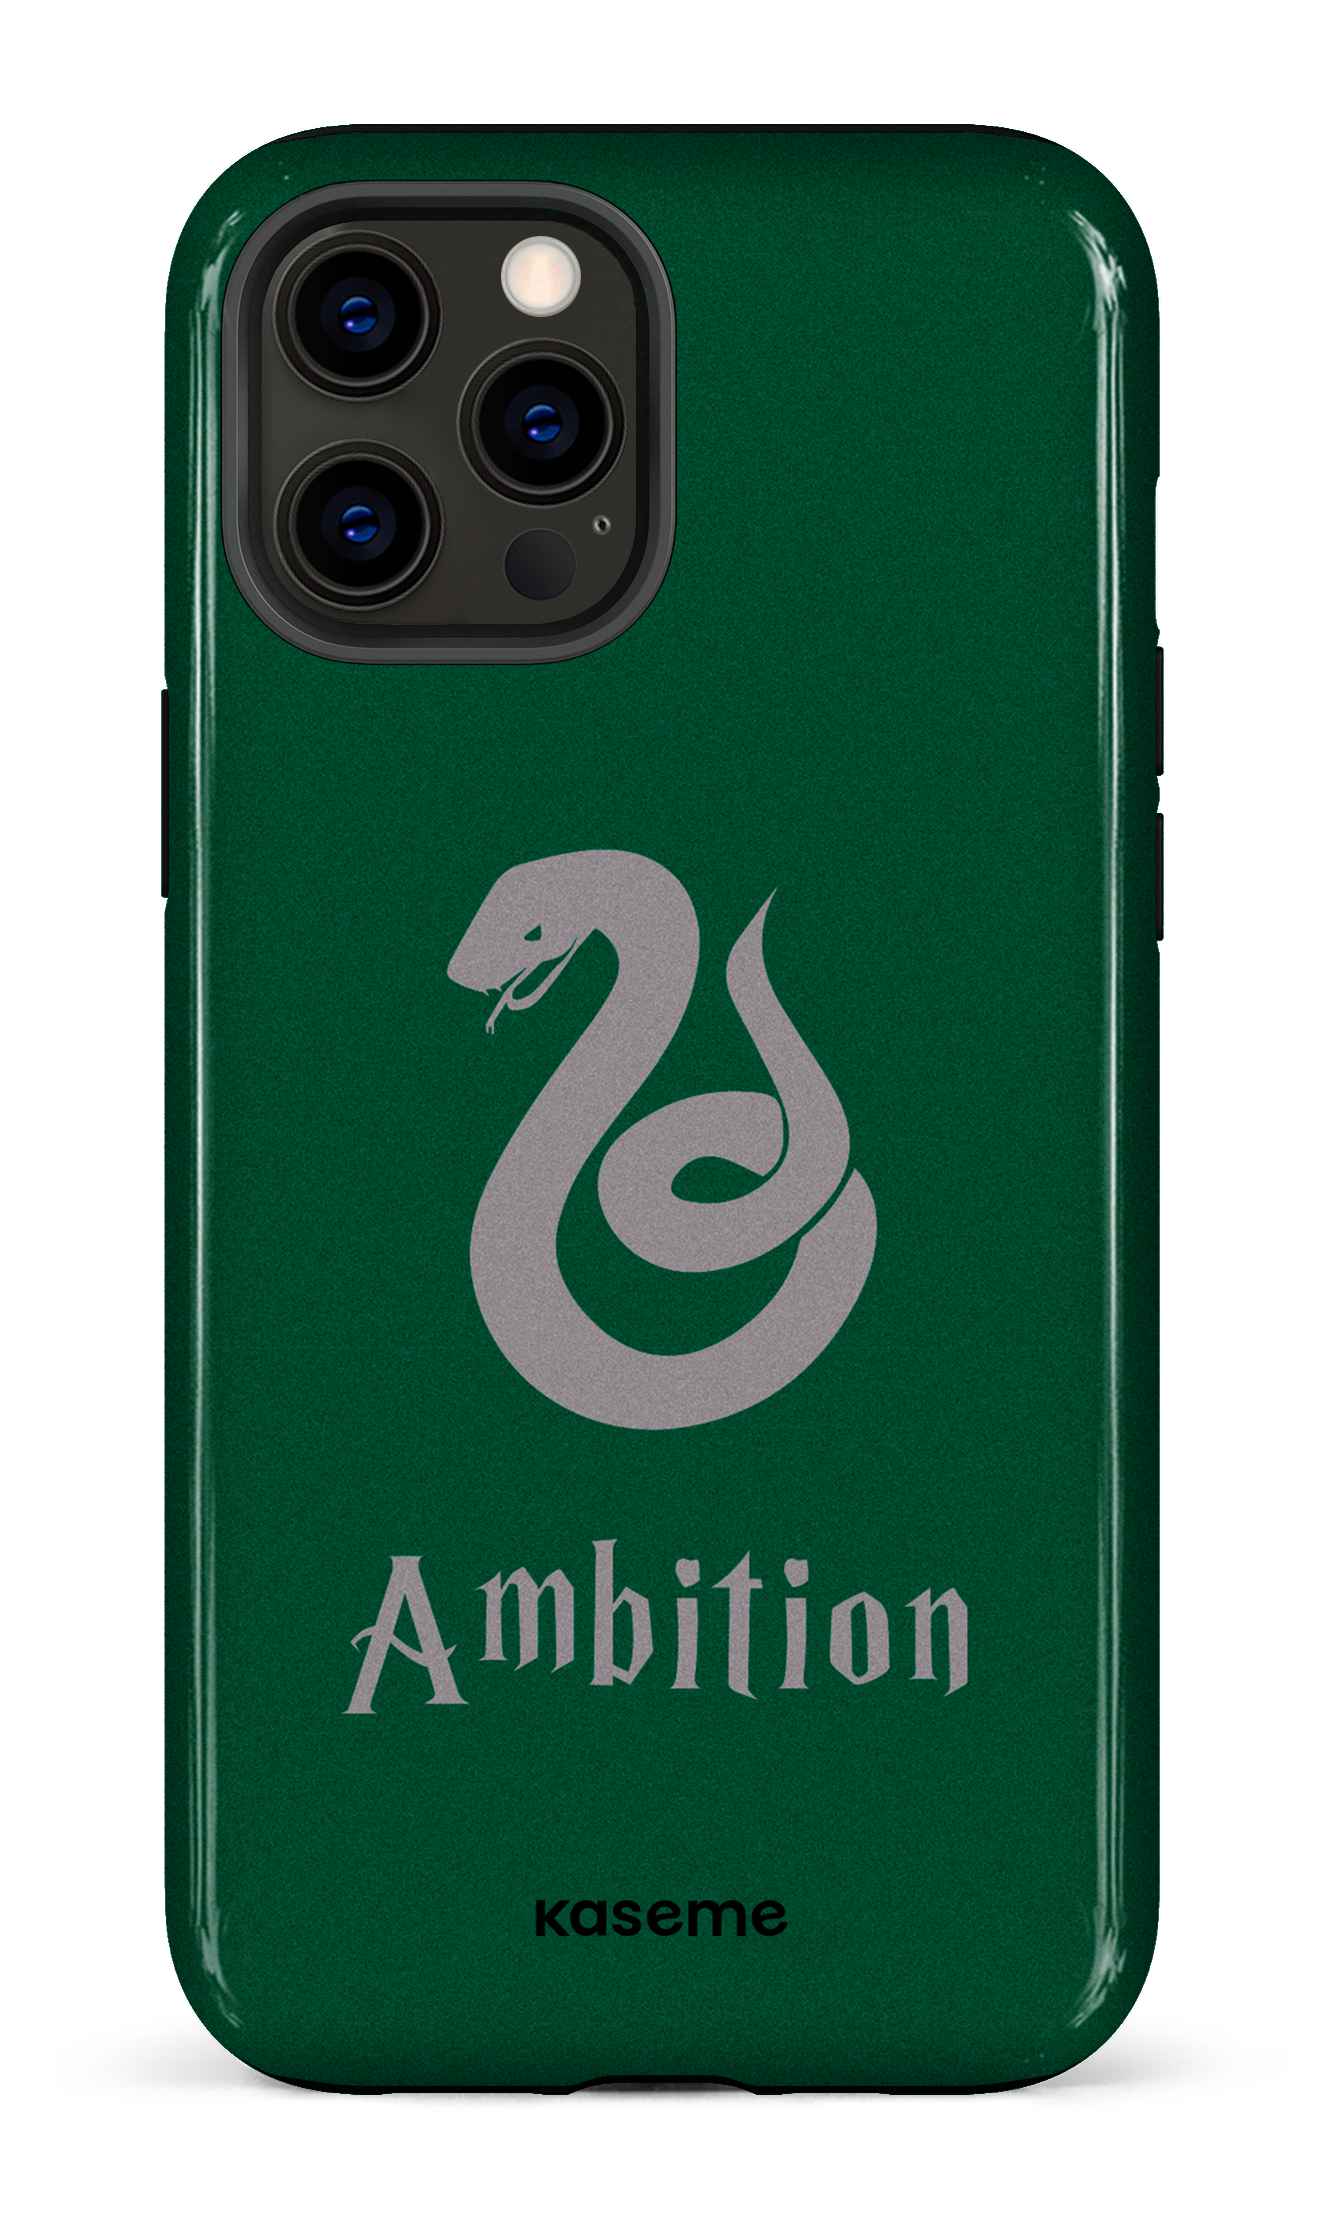 Ambition - iPhone 12 Pro Max